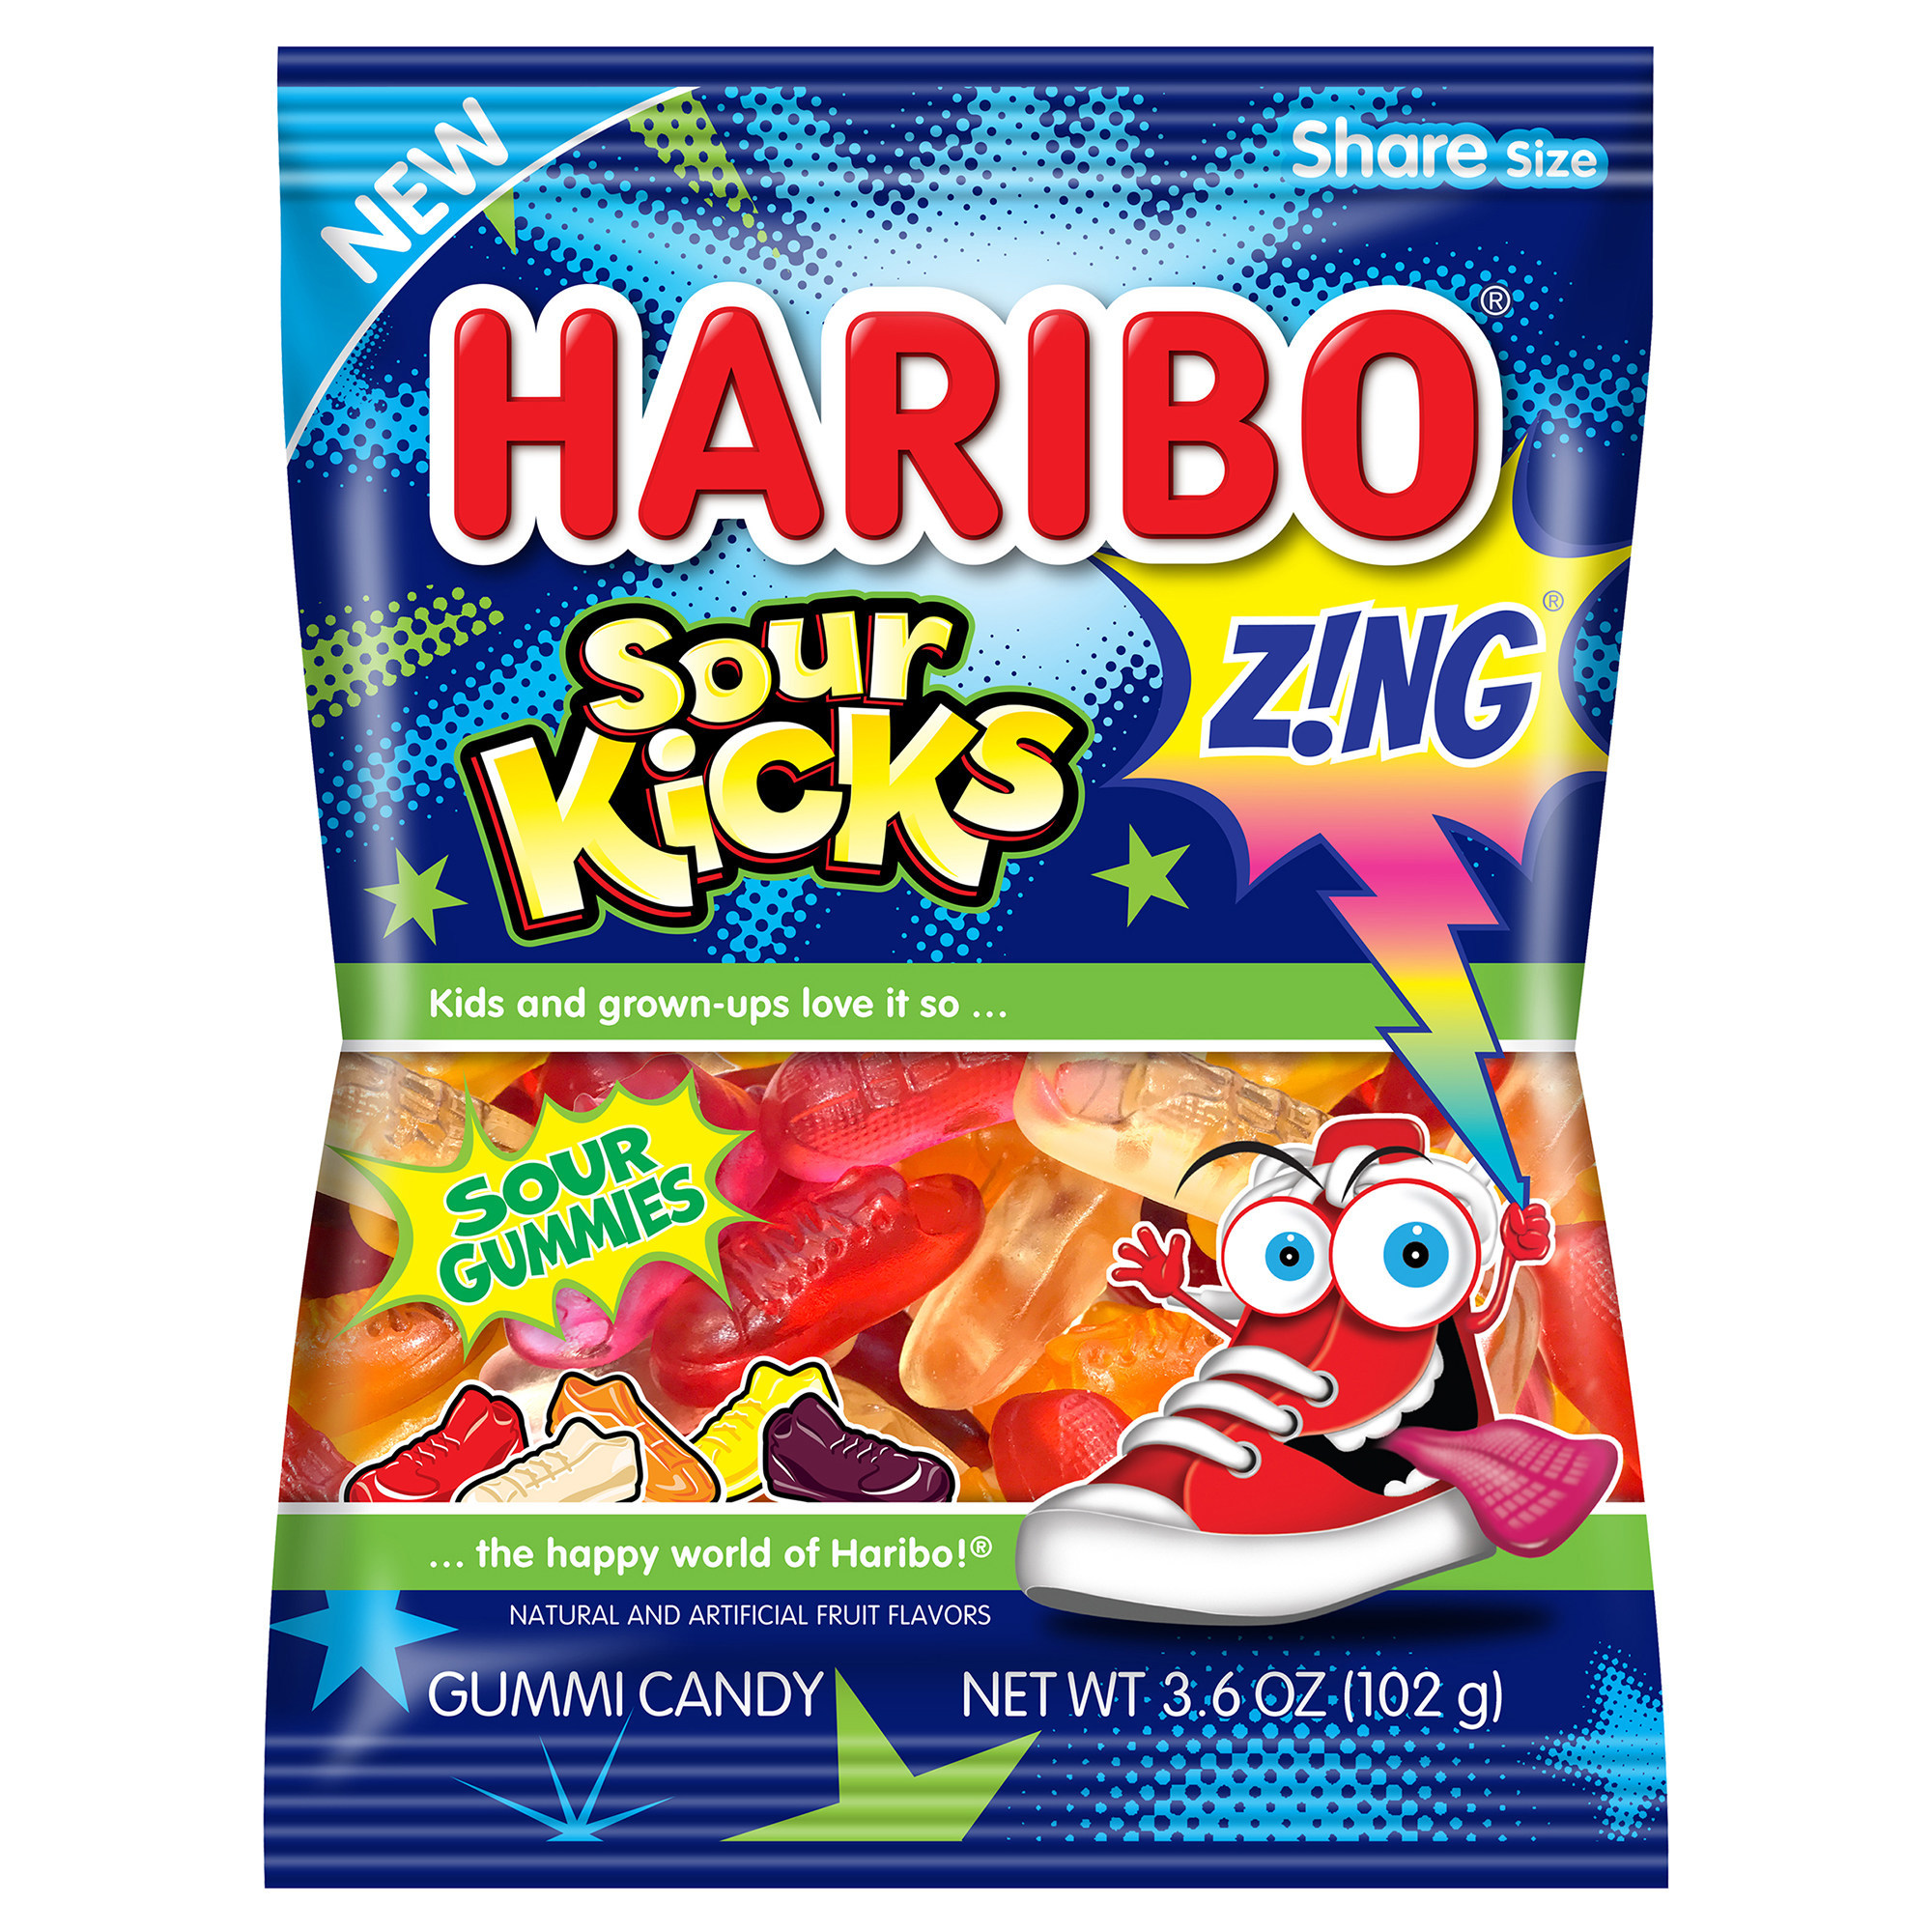 HARIBO Introduces Rainbow Worms and Z!NG Sour Kicks